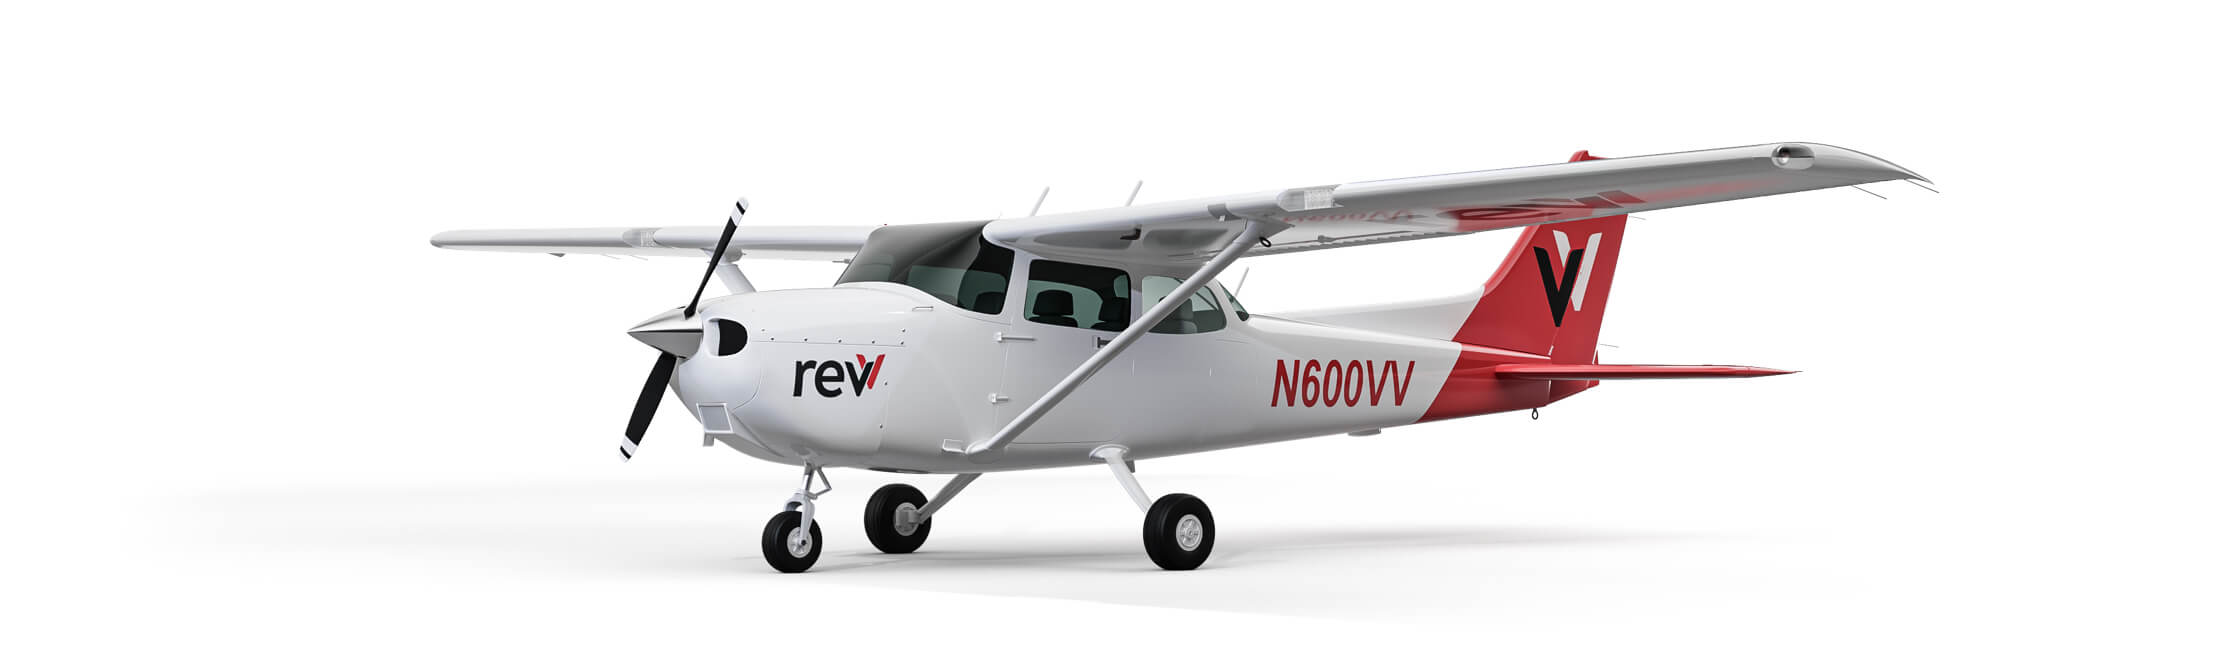 Cessna 172 Skyhawk branded with revv logo